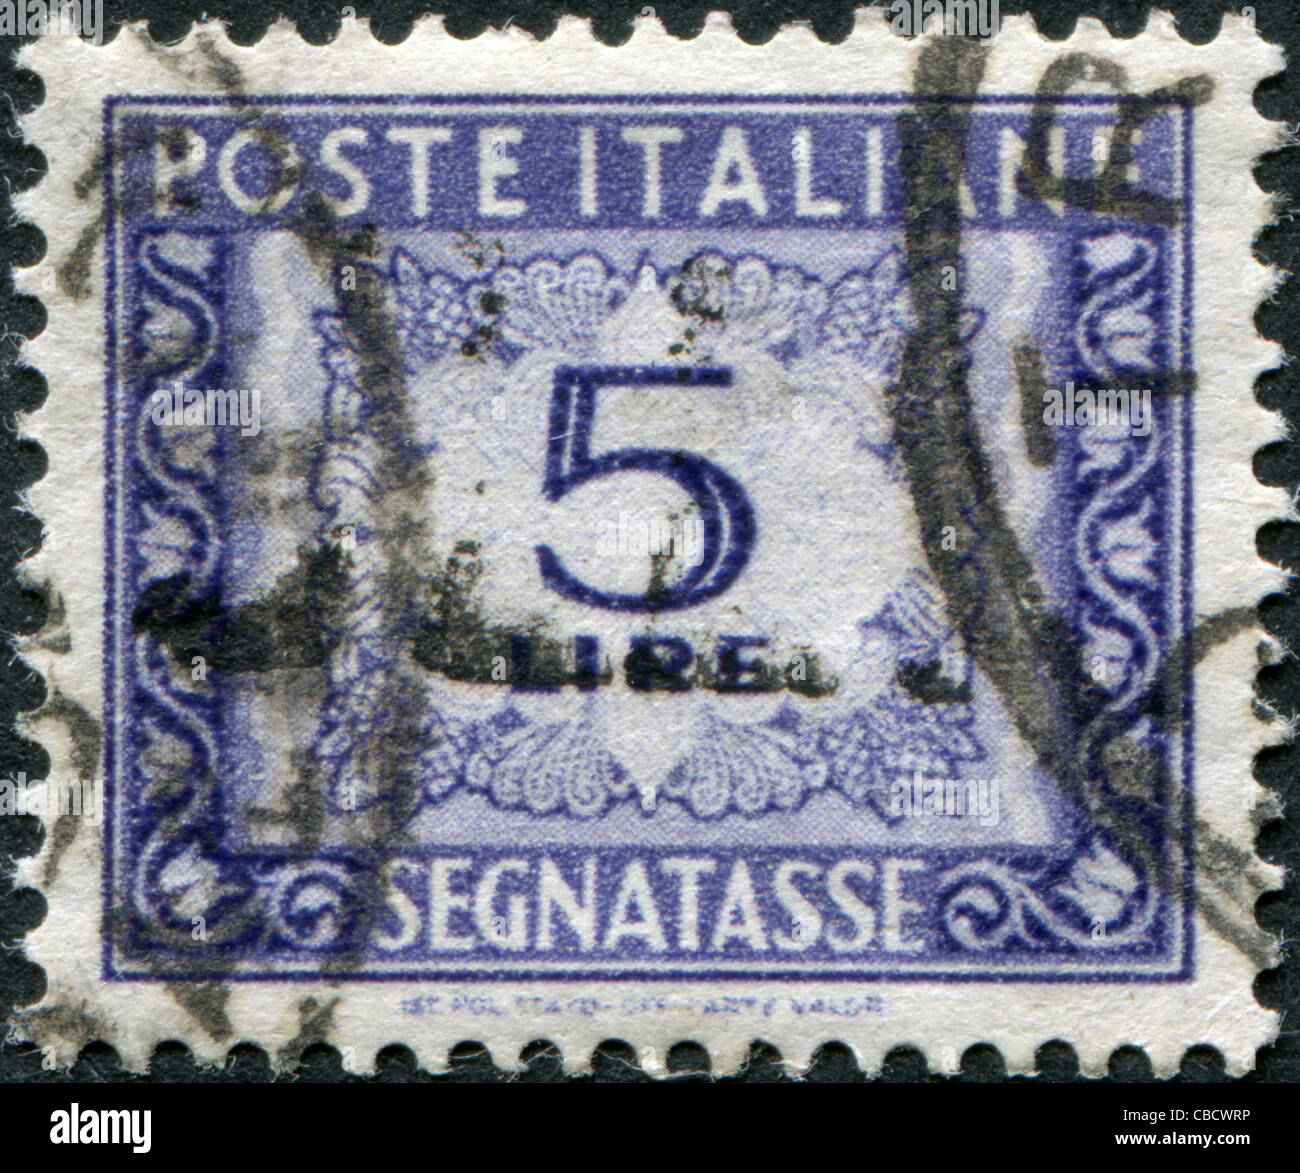 Estampillas postales italianas de Italia 1946 sobreimpresas A.M.G.V.G marca postal de vuelo 